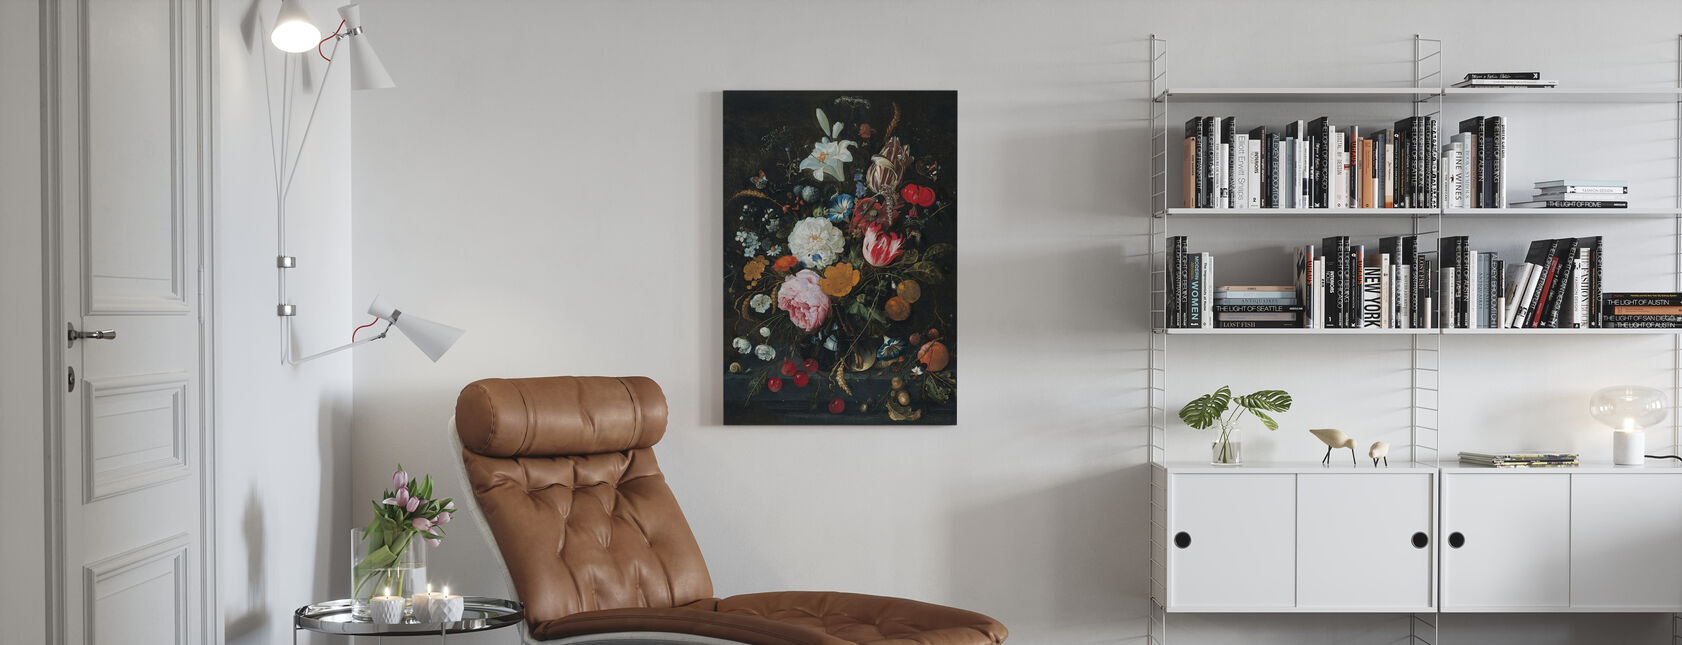 Flowers in a Glass Vase with Fruit - Jan Davidsz de Heem - Canvas print - Living Room